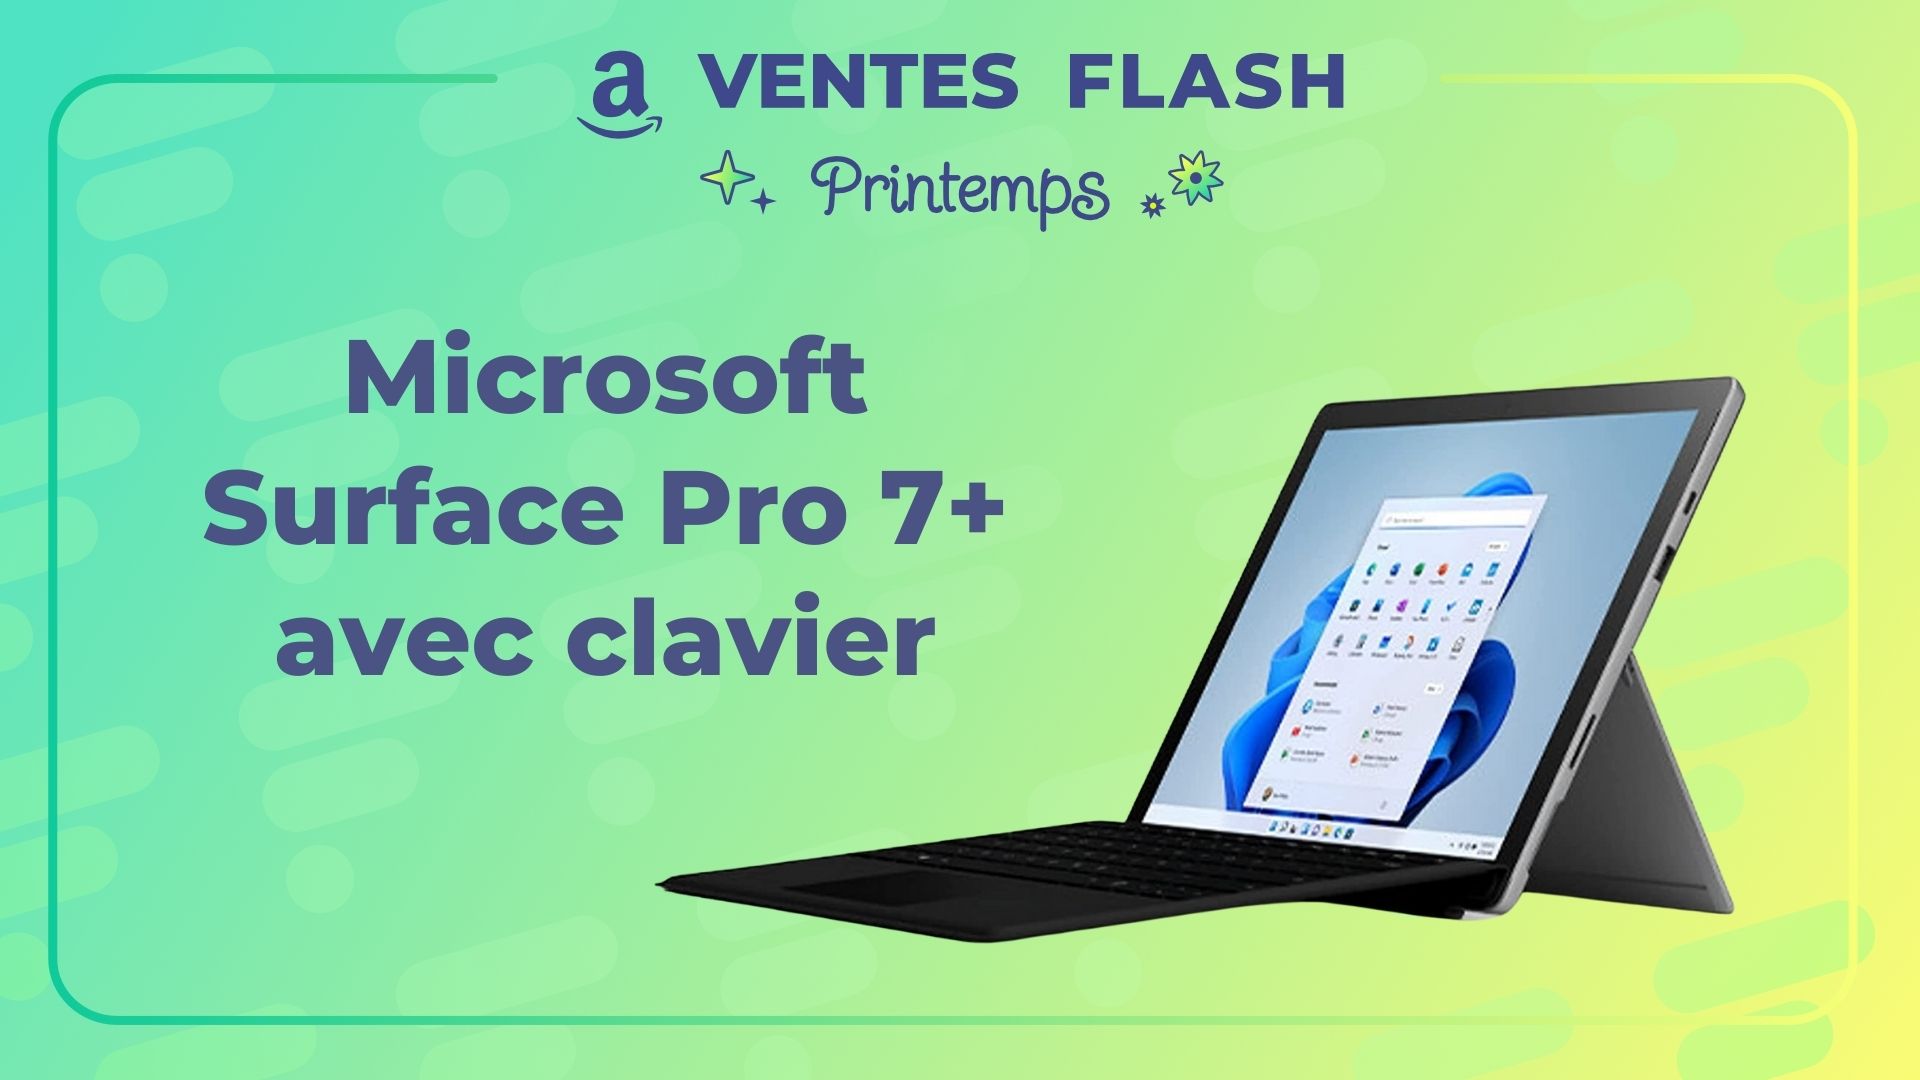 Clavier Microsoft Surface Pro